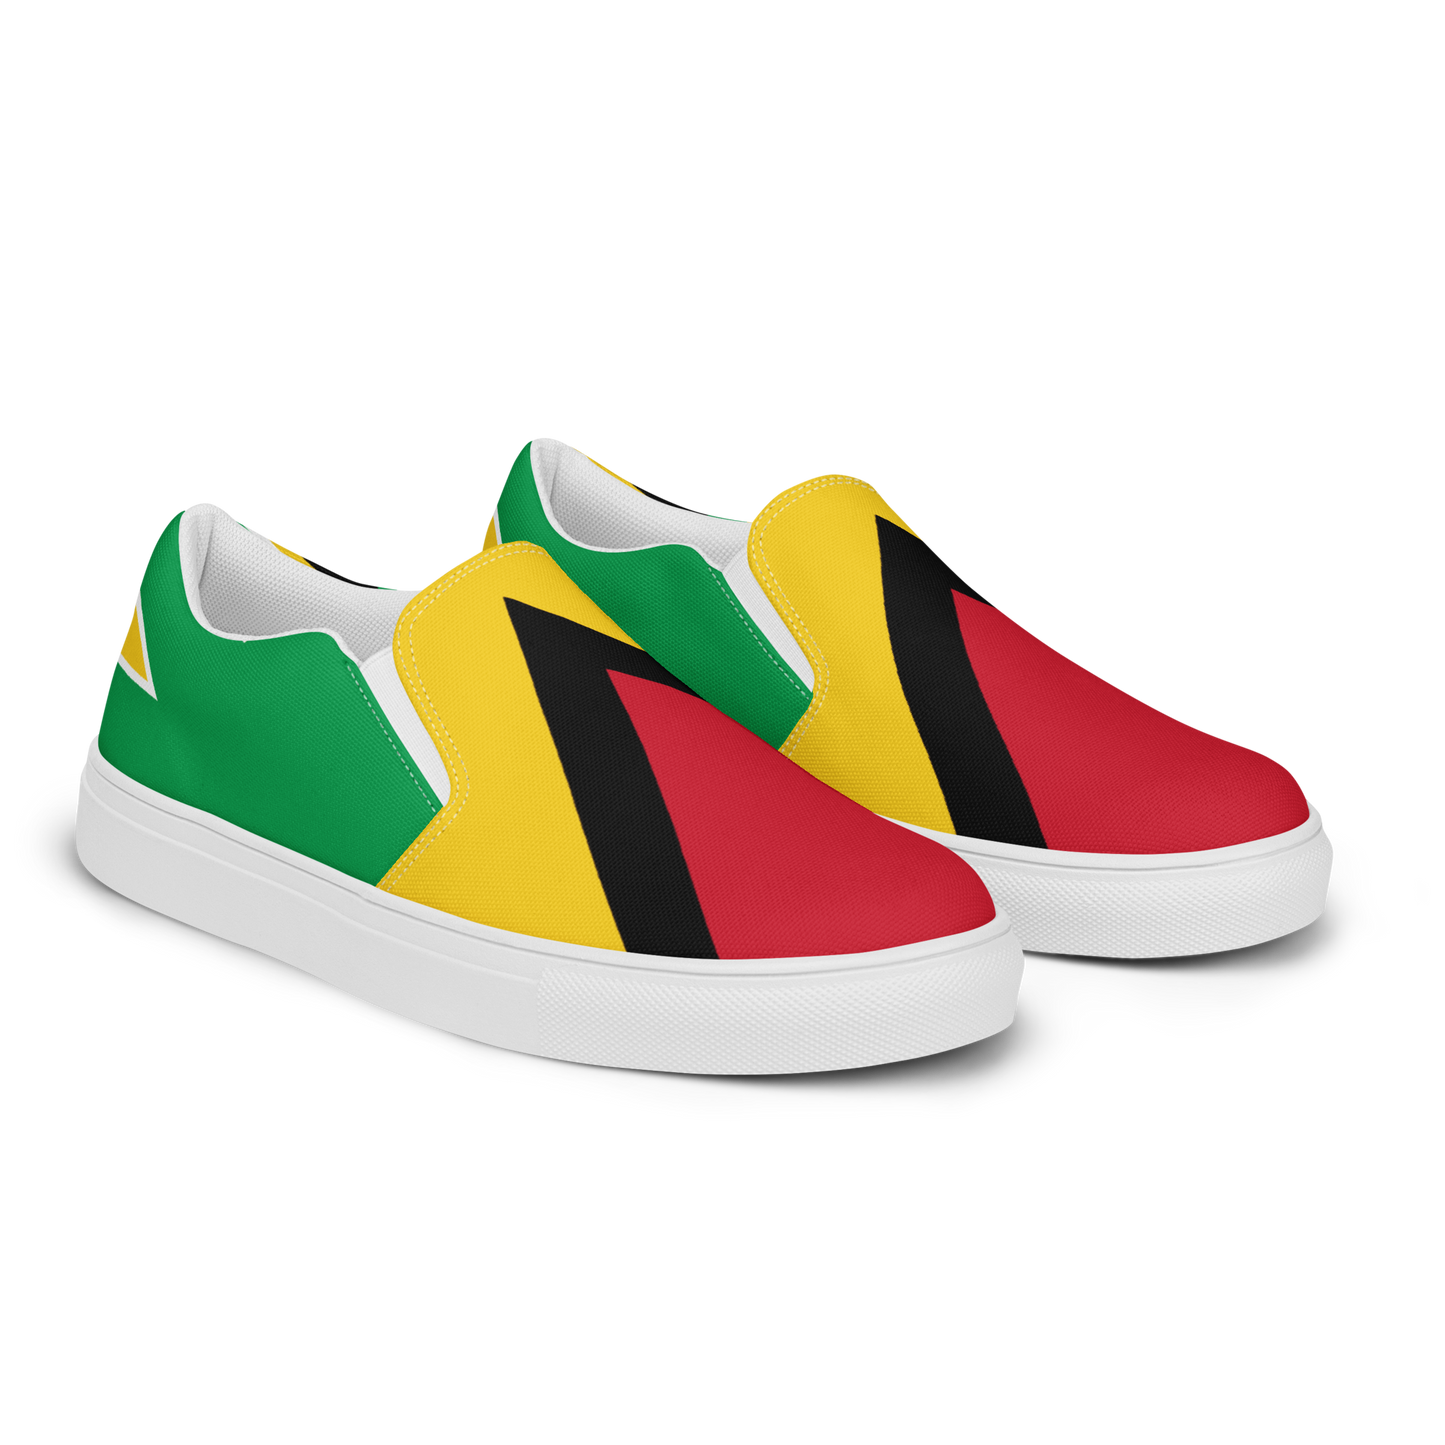 Guyana Women’s slip-on canvas shoes